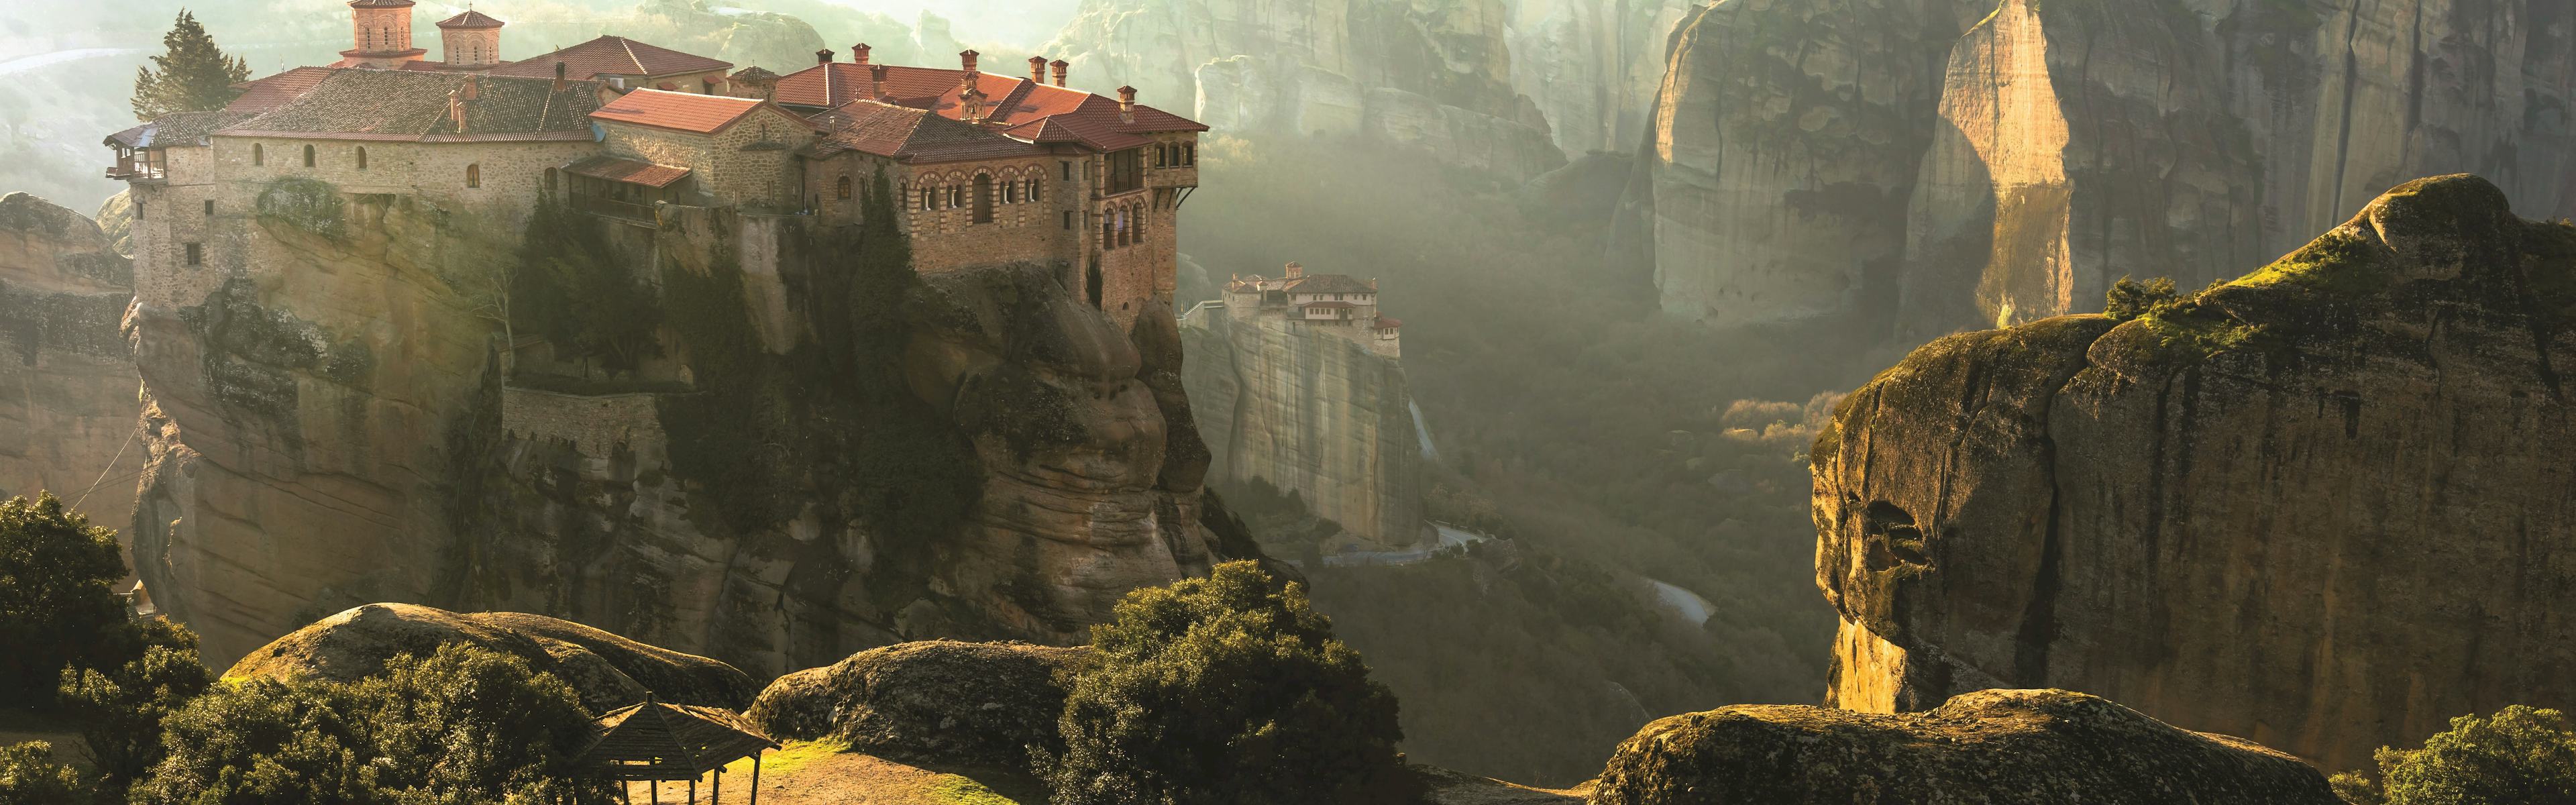 The Meteora Monasteries in Greece, Europe